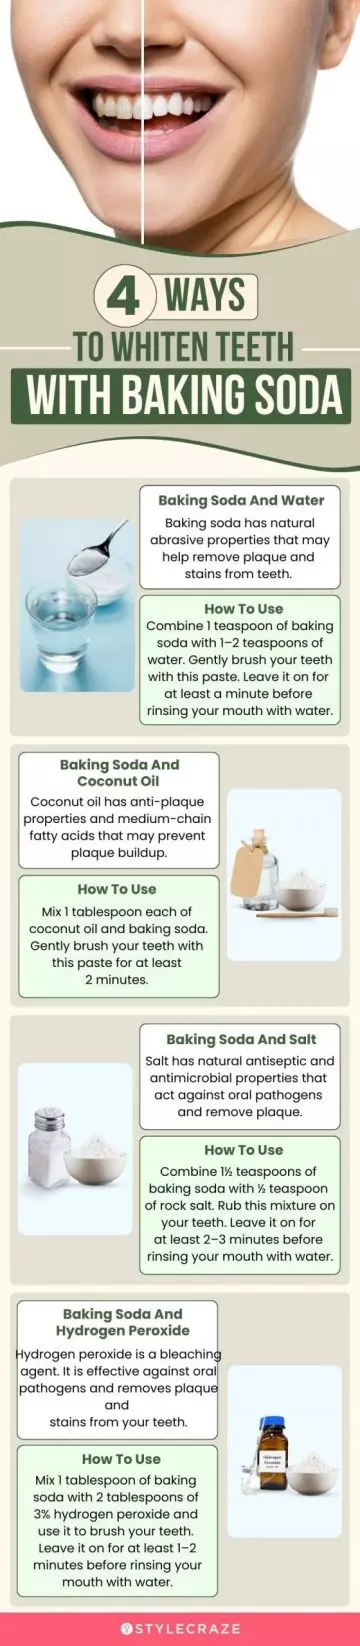 4 ways to whiten teeth with baking soda (infographic)